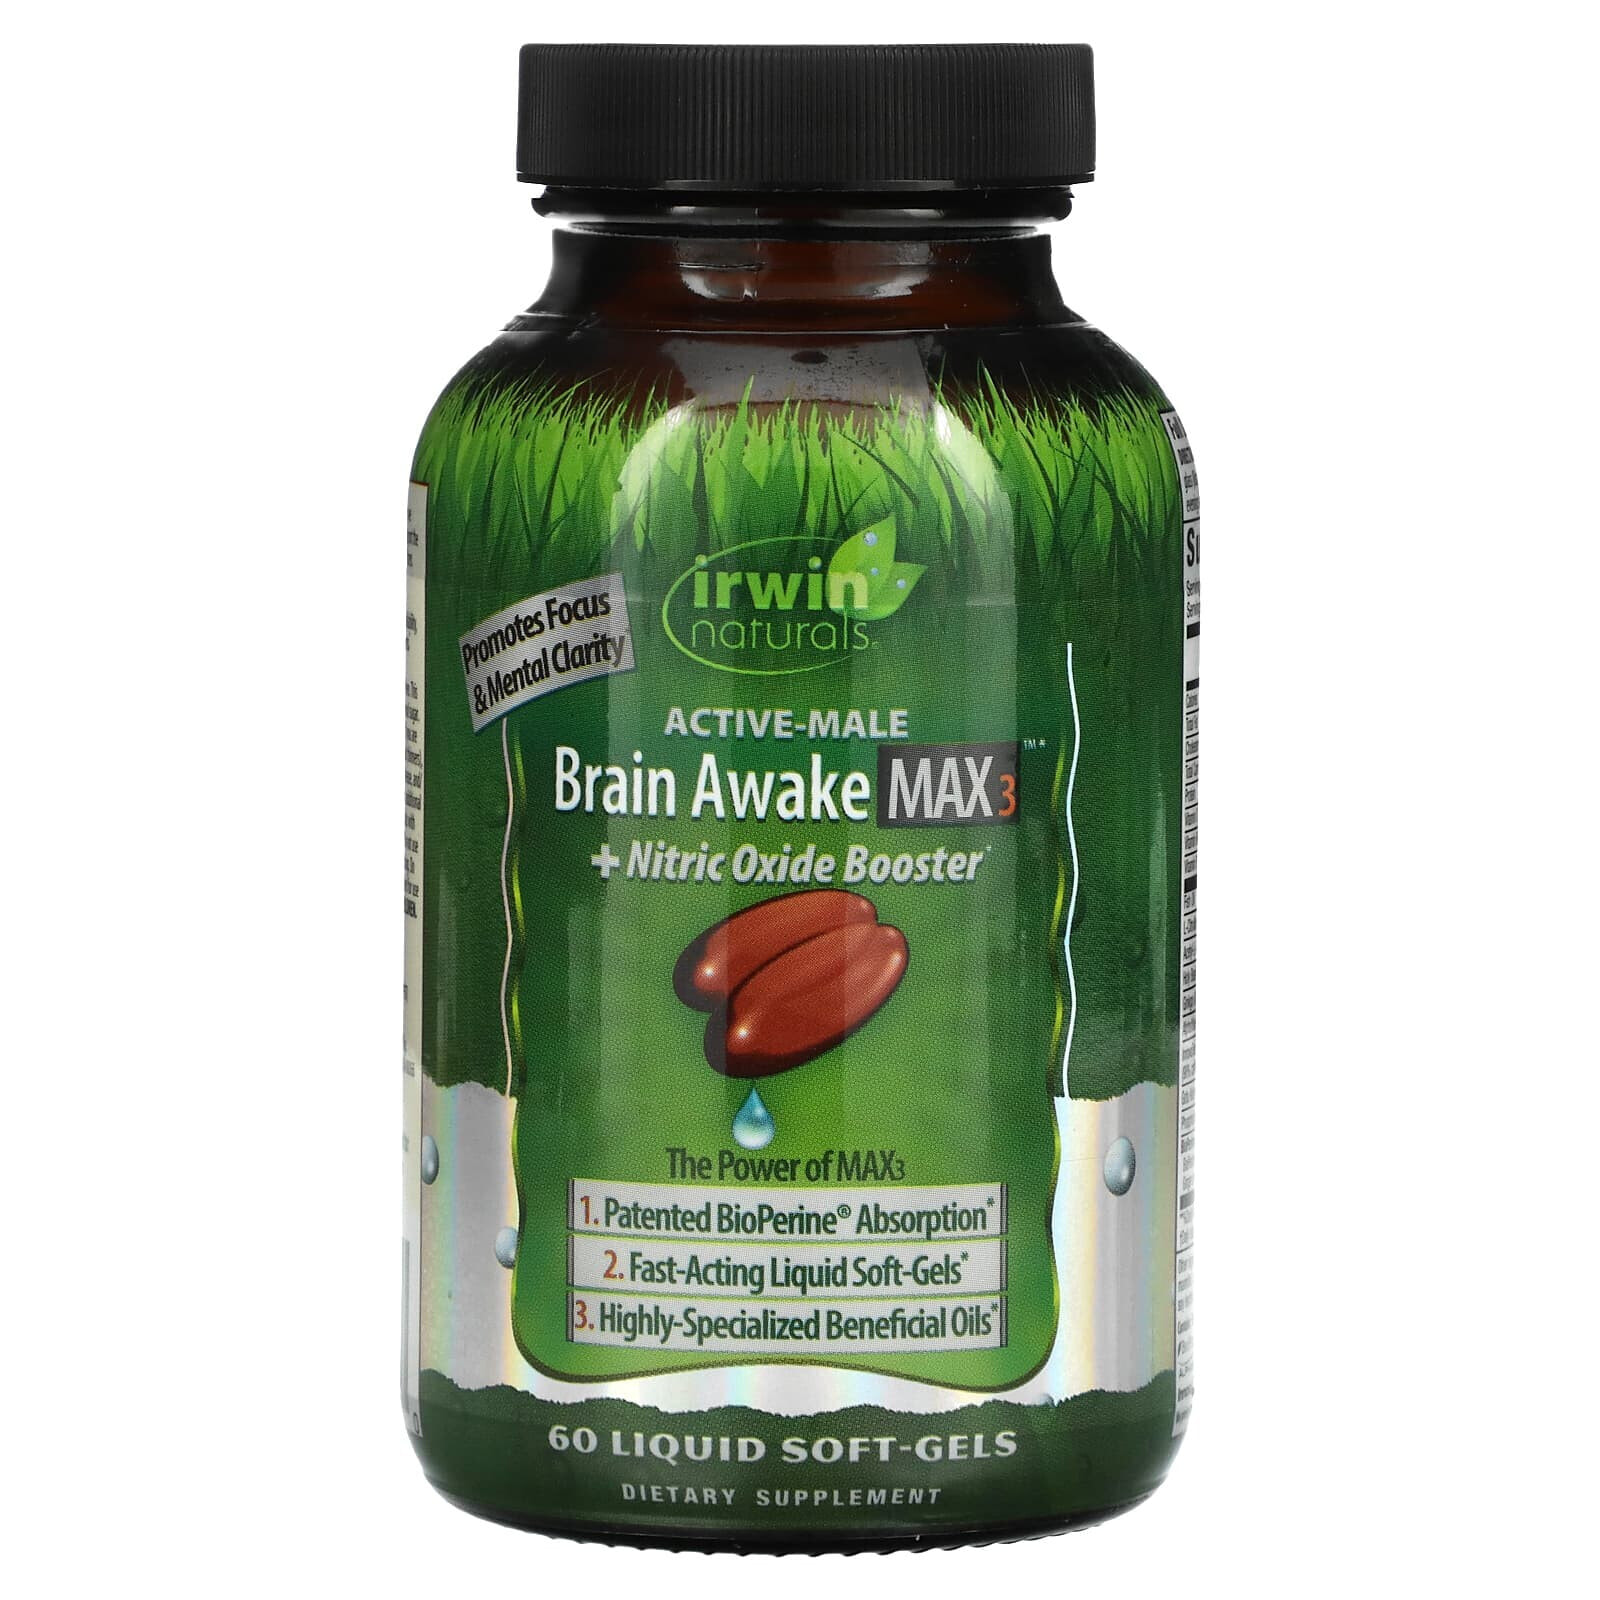 Brain Awake Max 3 + Nitric Oxide Booster, 60 Liquid Soft-Gels